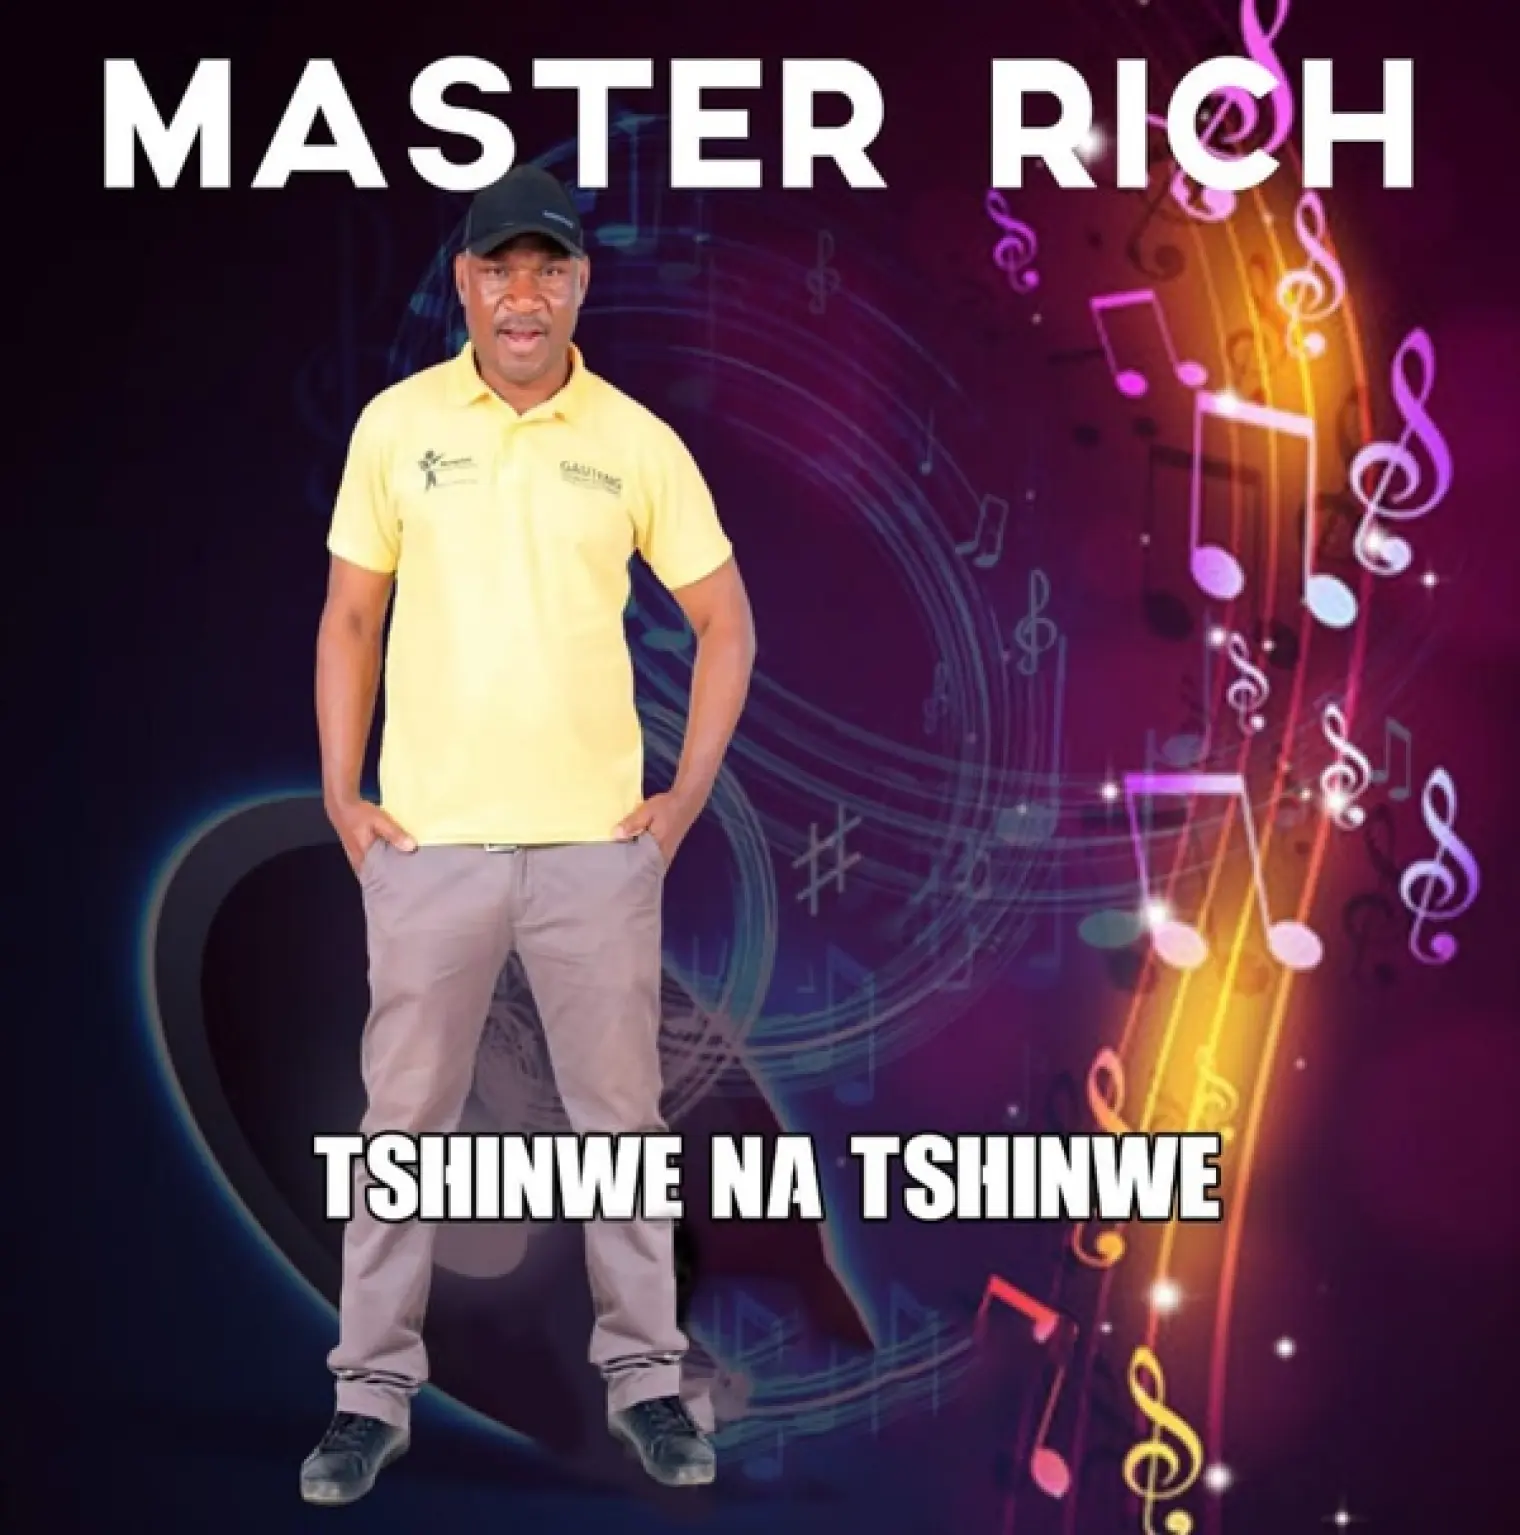 Tshinwe Na Tshinwe -  Master Rich 